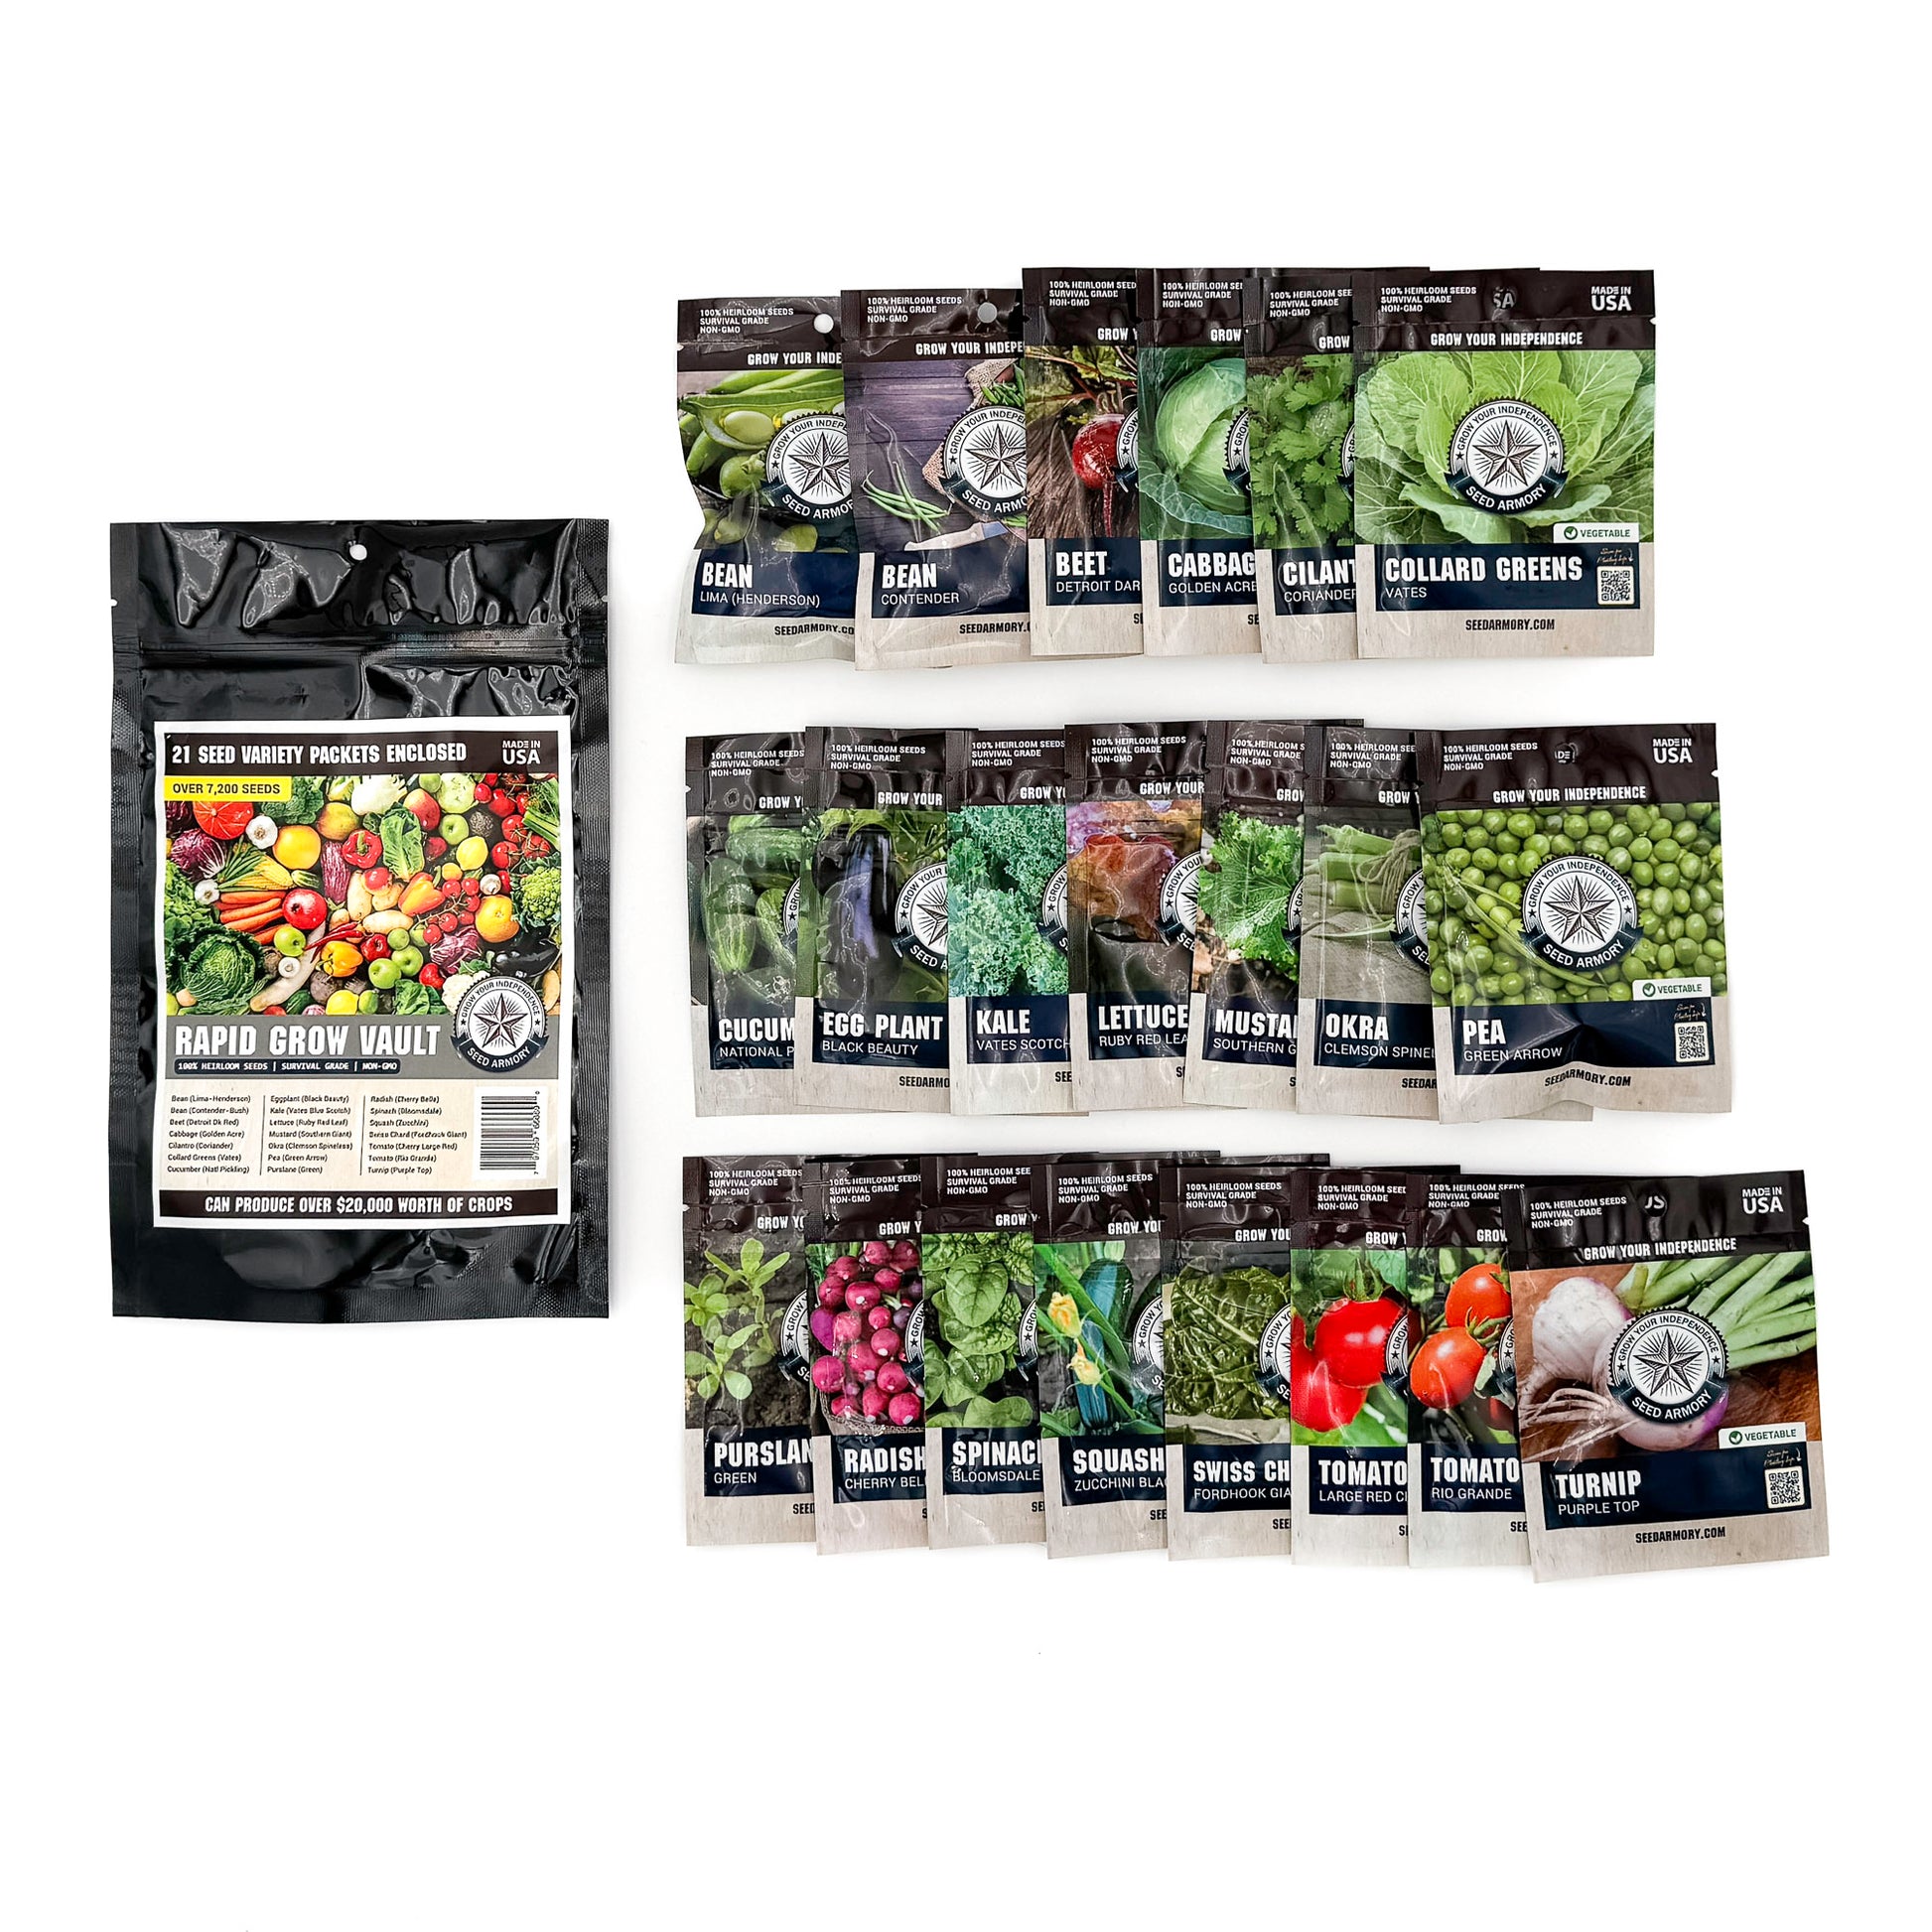 Complete set of 21 heirloom vegetable seed packets in the Rapid Grow Vault